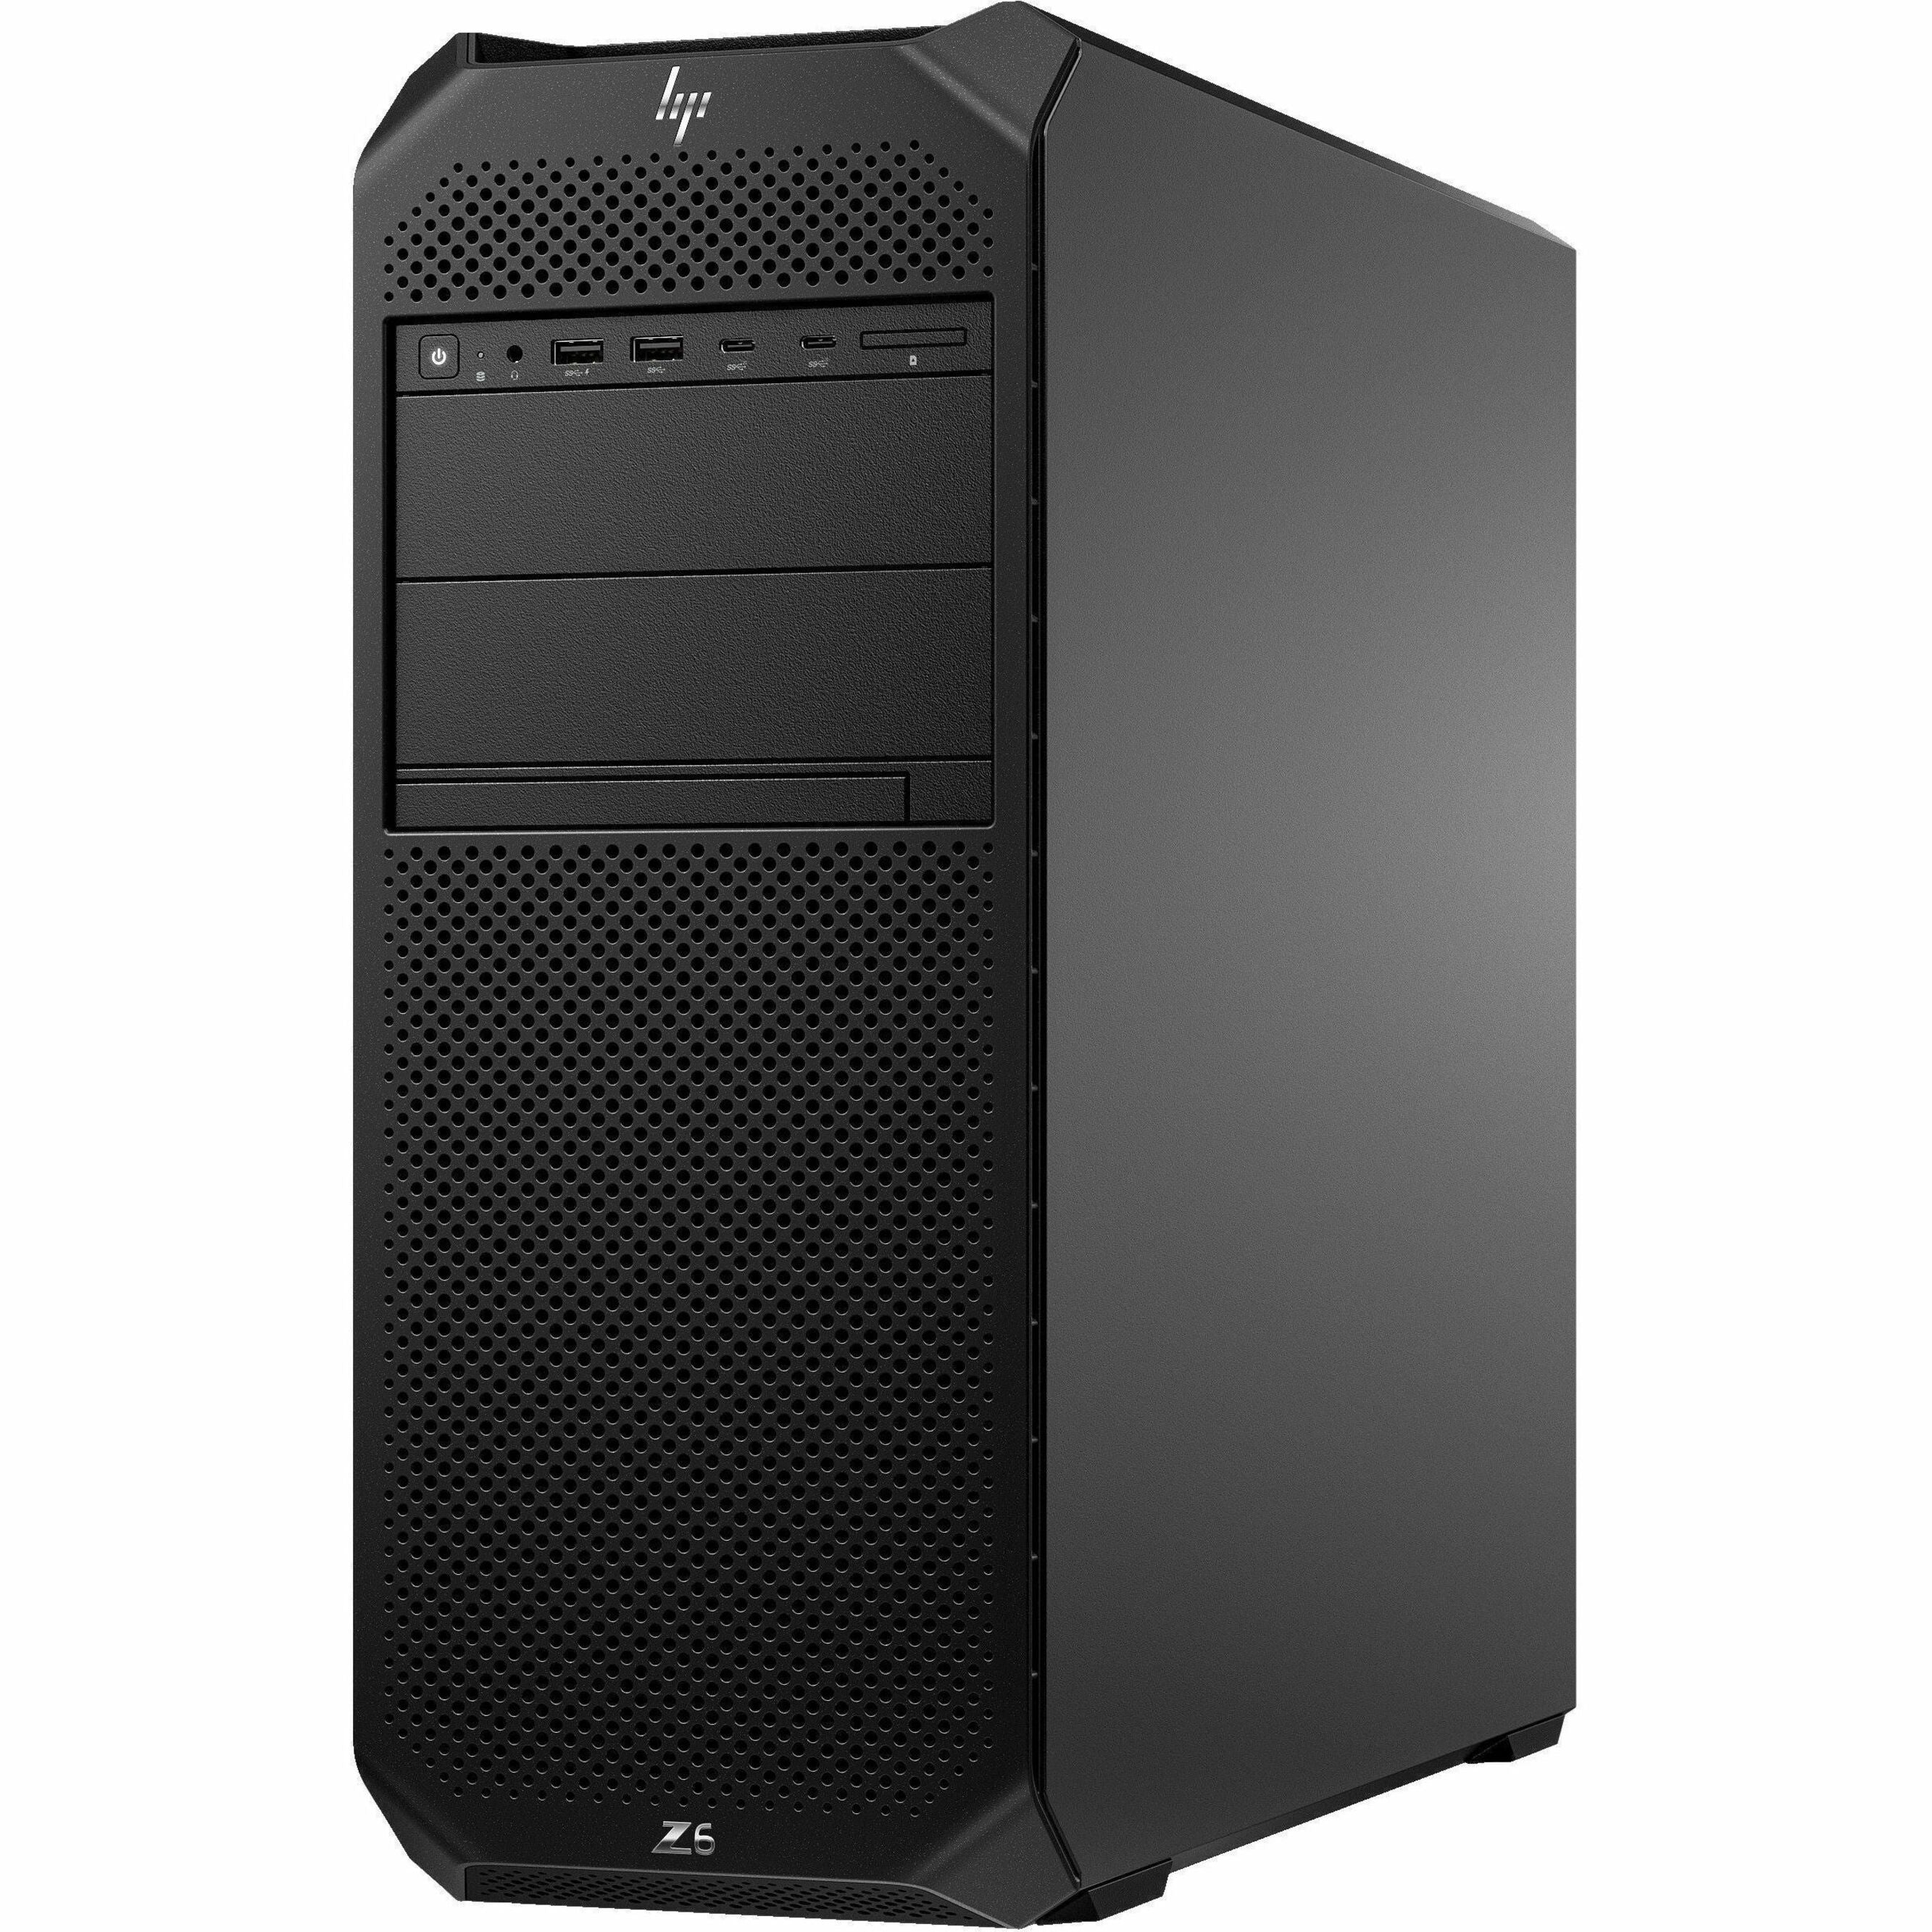 HP Z6 G5 Tower Workstation, Intel Xeon Dodeca-core, 16GB RAM, 512GB SSD, Windows 11 Pro